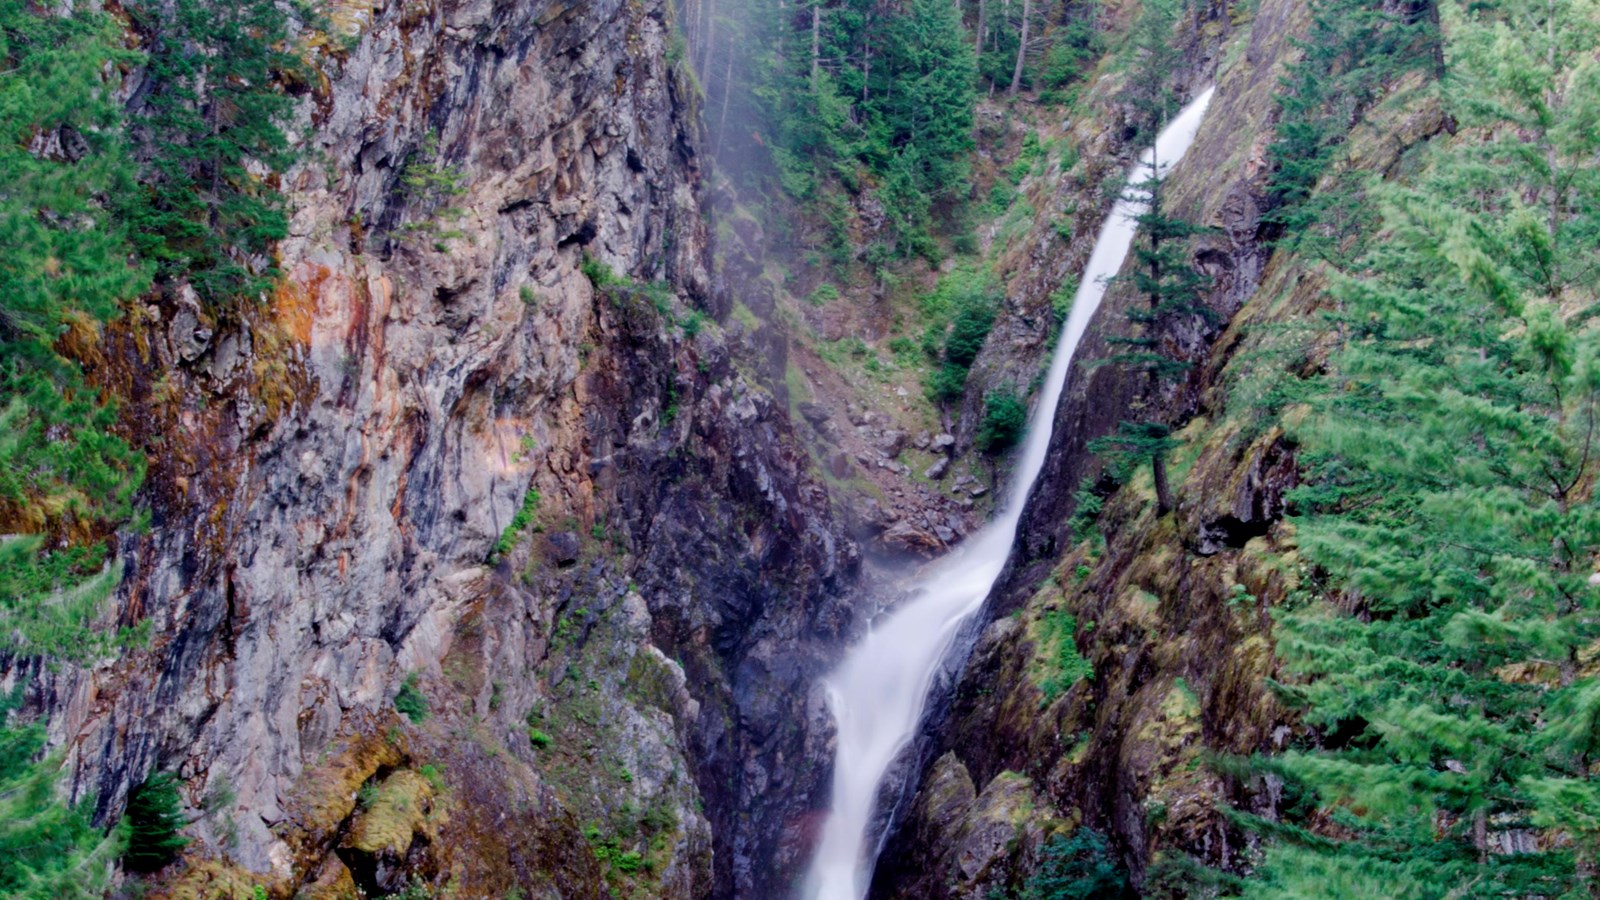 A waterfall flows through a steep, rocky gorge.